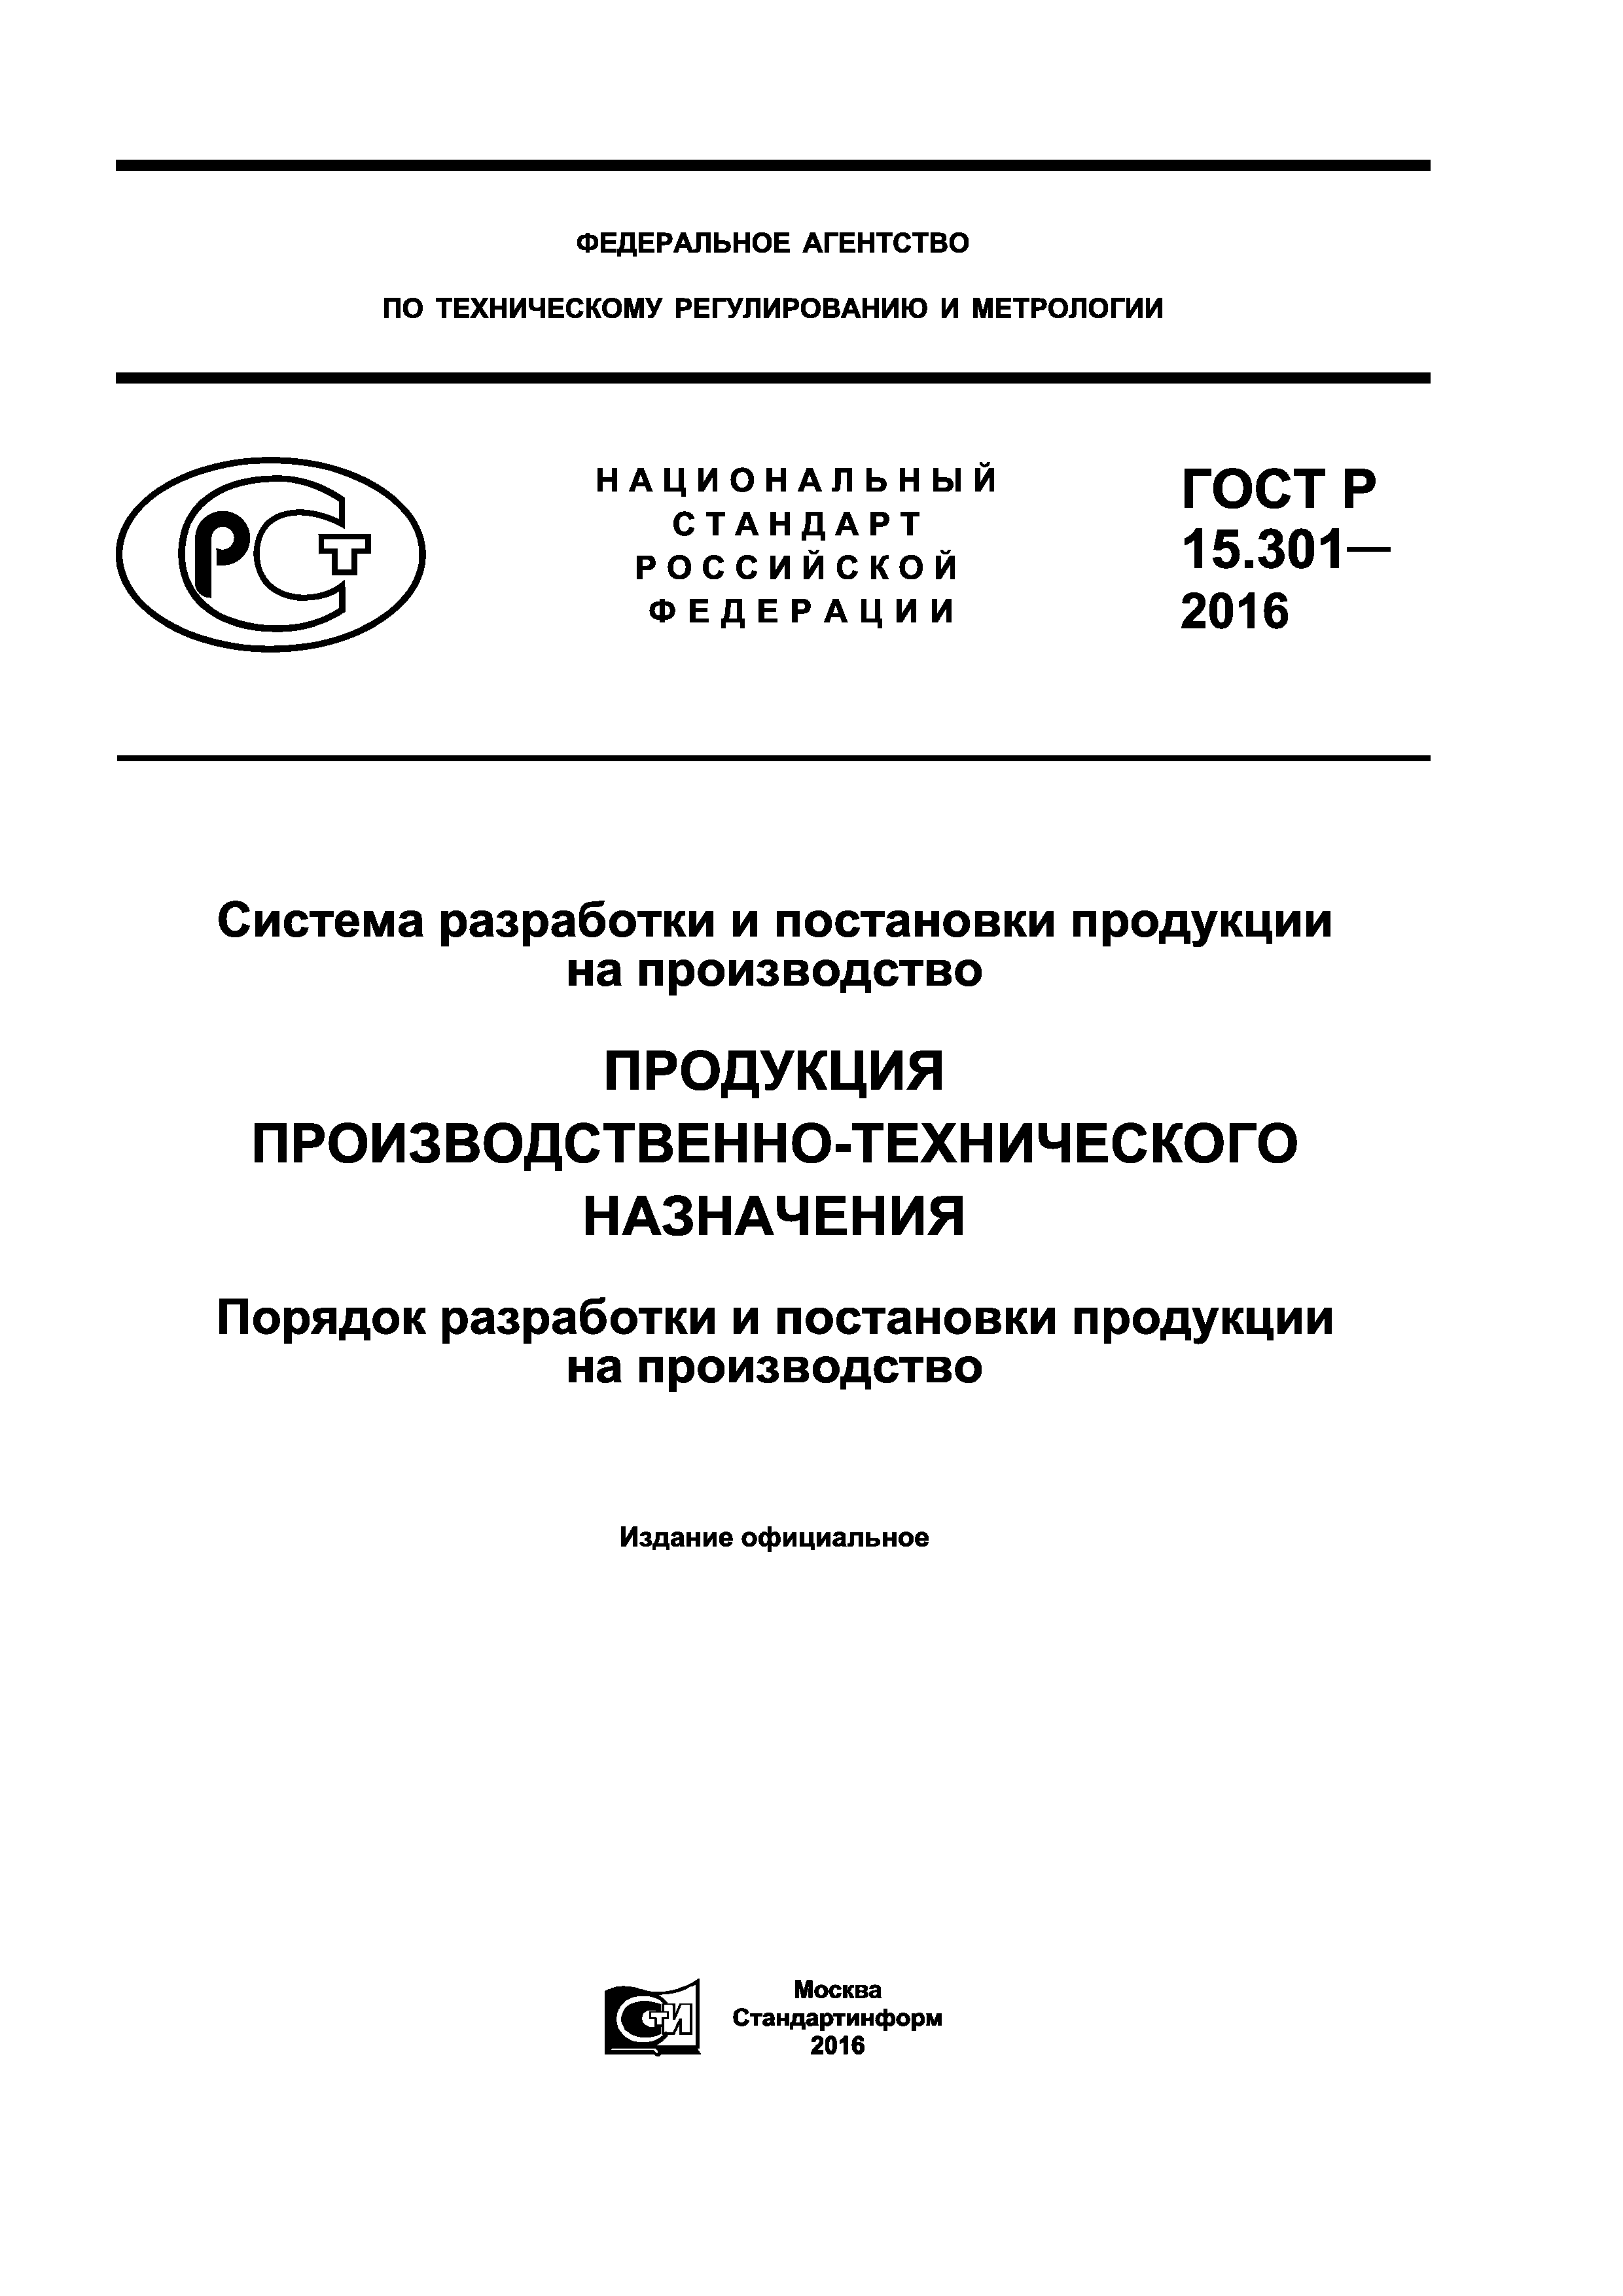 ГОСТ Р 15.301-2016